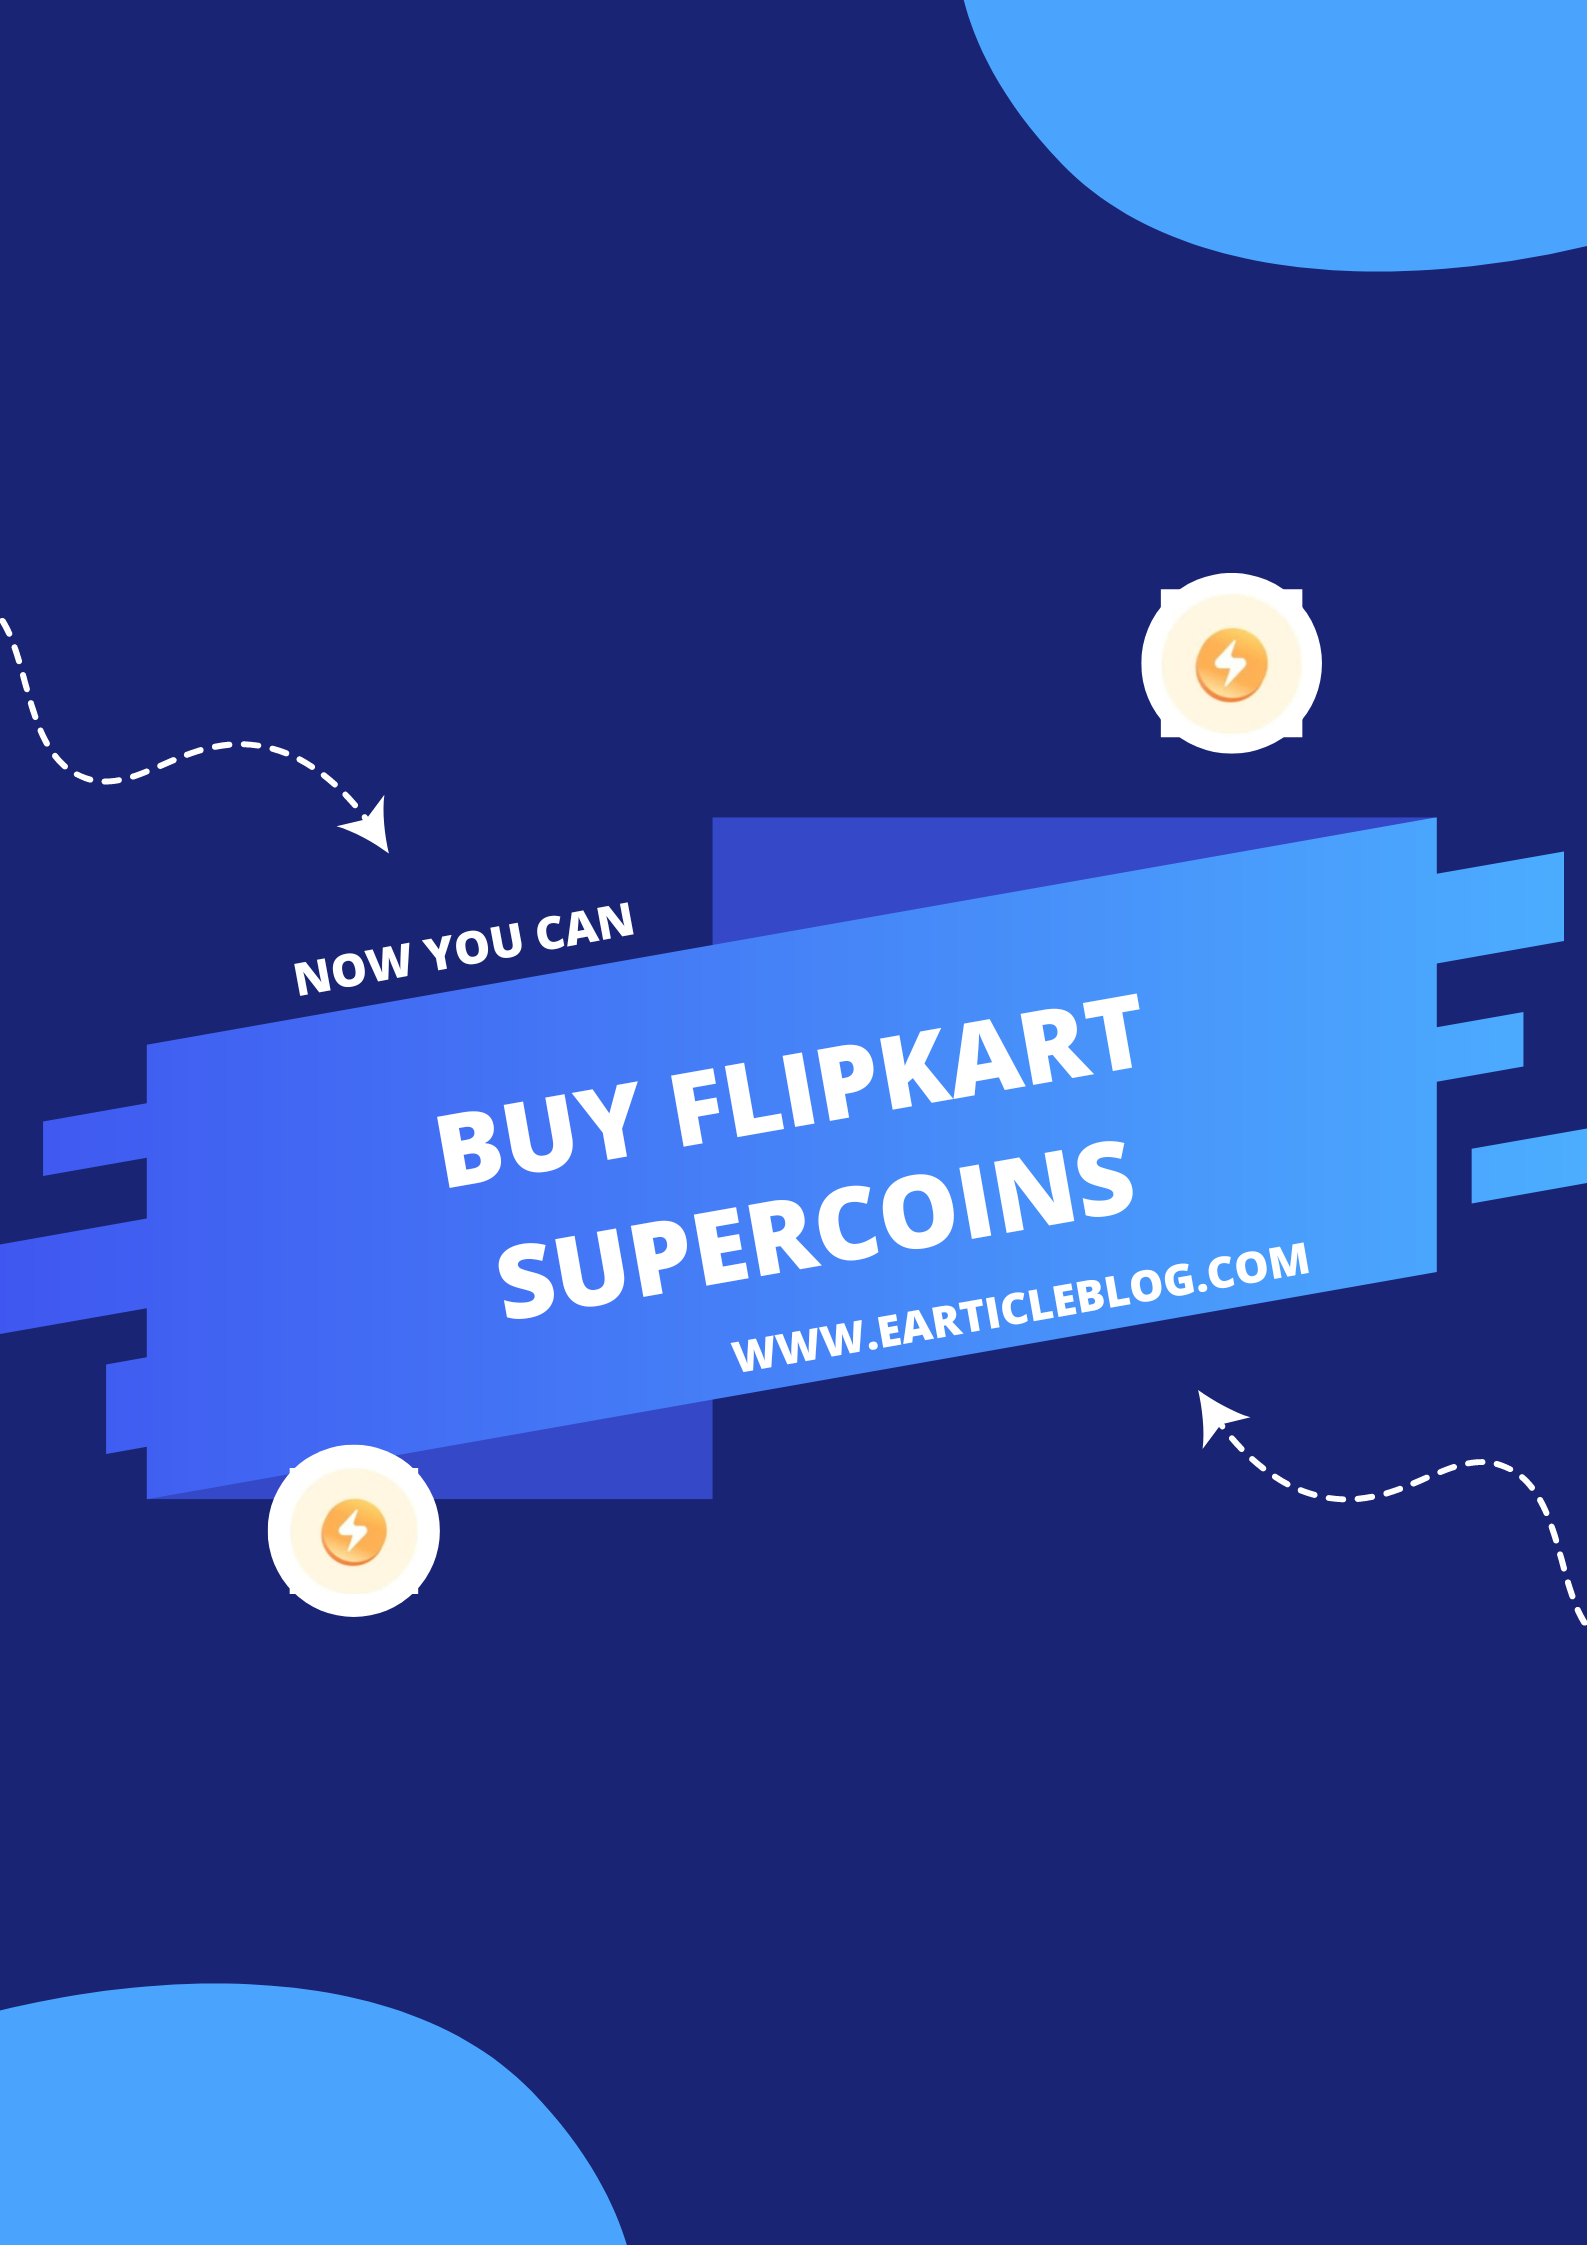 How To Buy Flipkart Supercoins With Cash Online